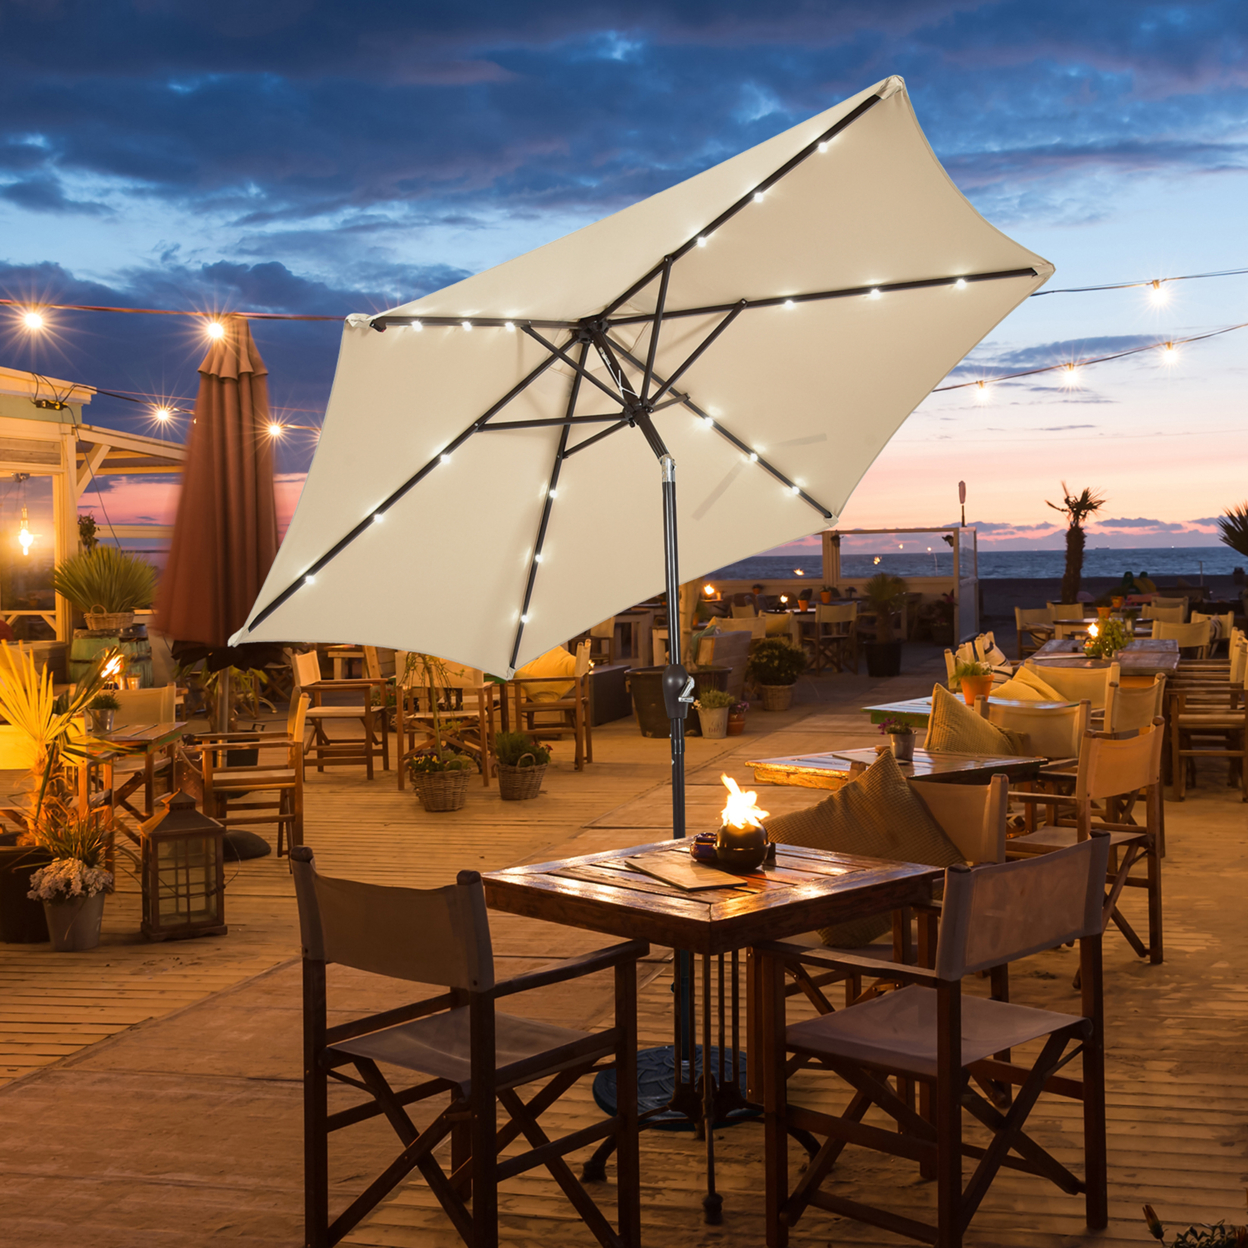 9 Ft Patio Table Market Umbrella Yard Outdoor W/ Solar LED Lights - Beige